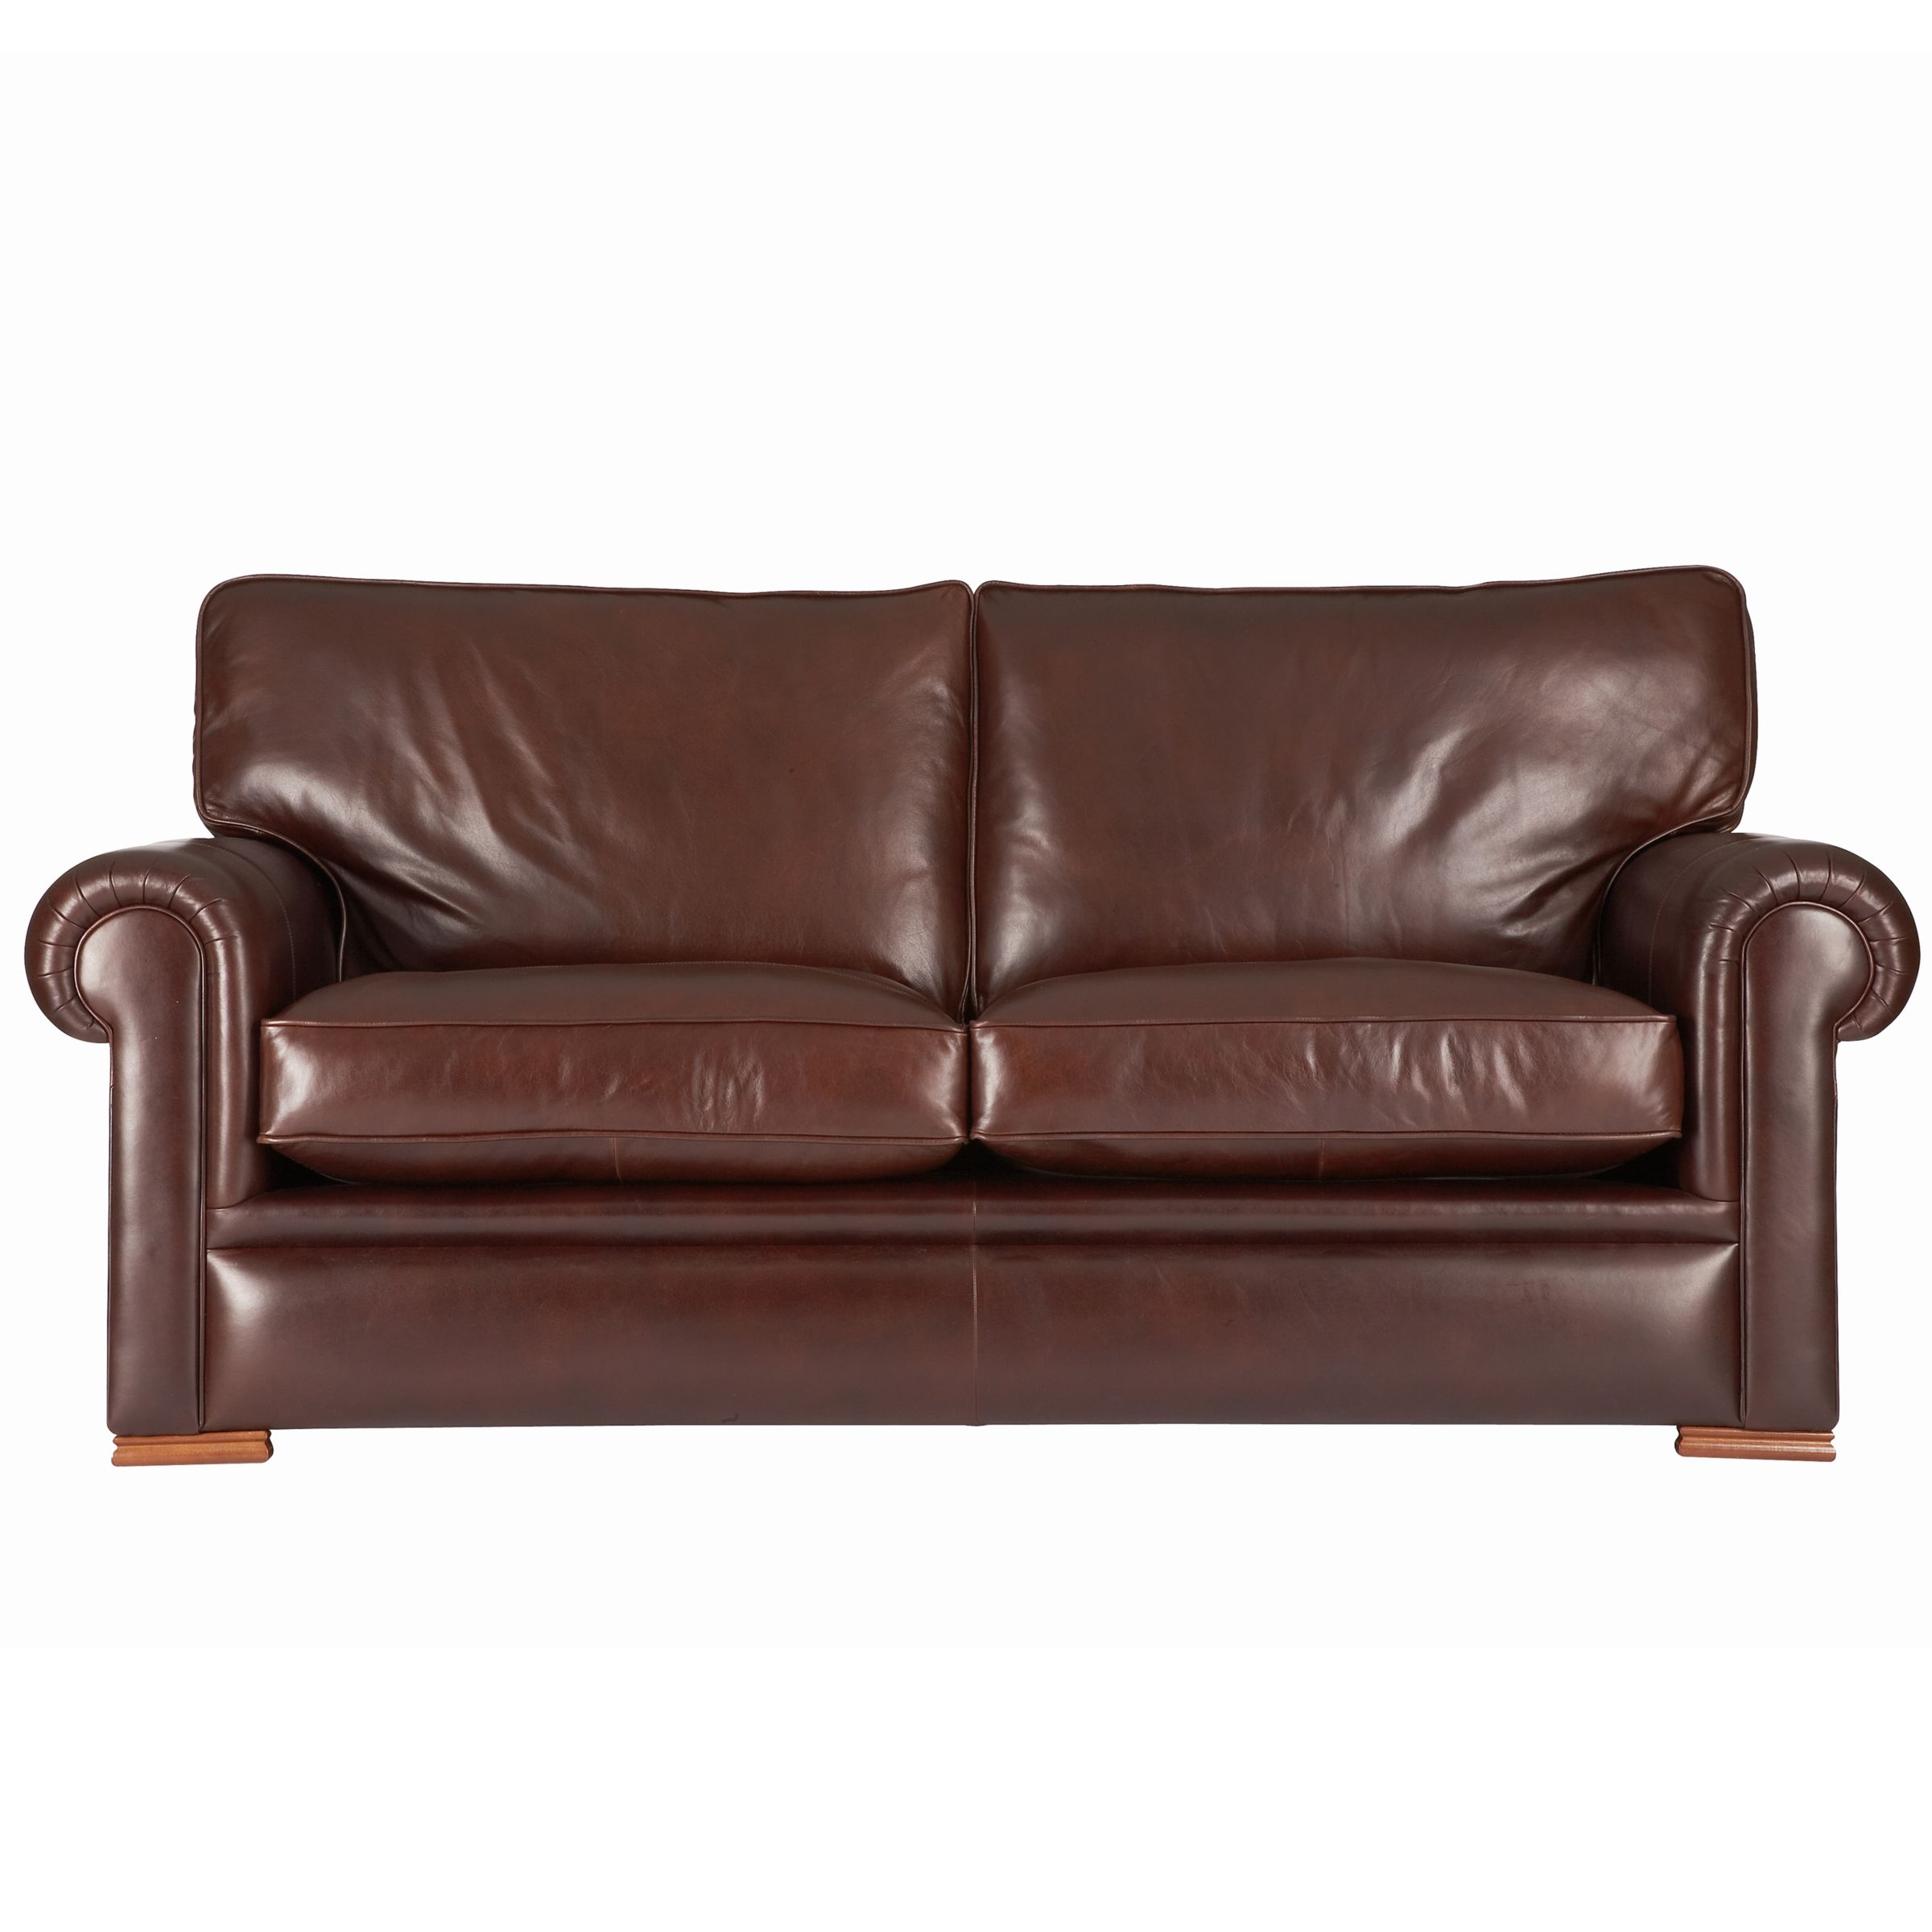 John Lewis Romsey Large Leather Sofa, Murano